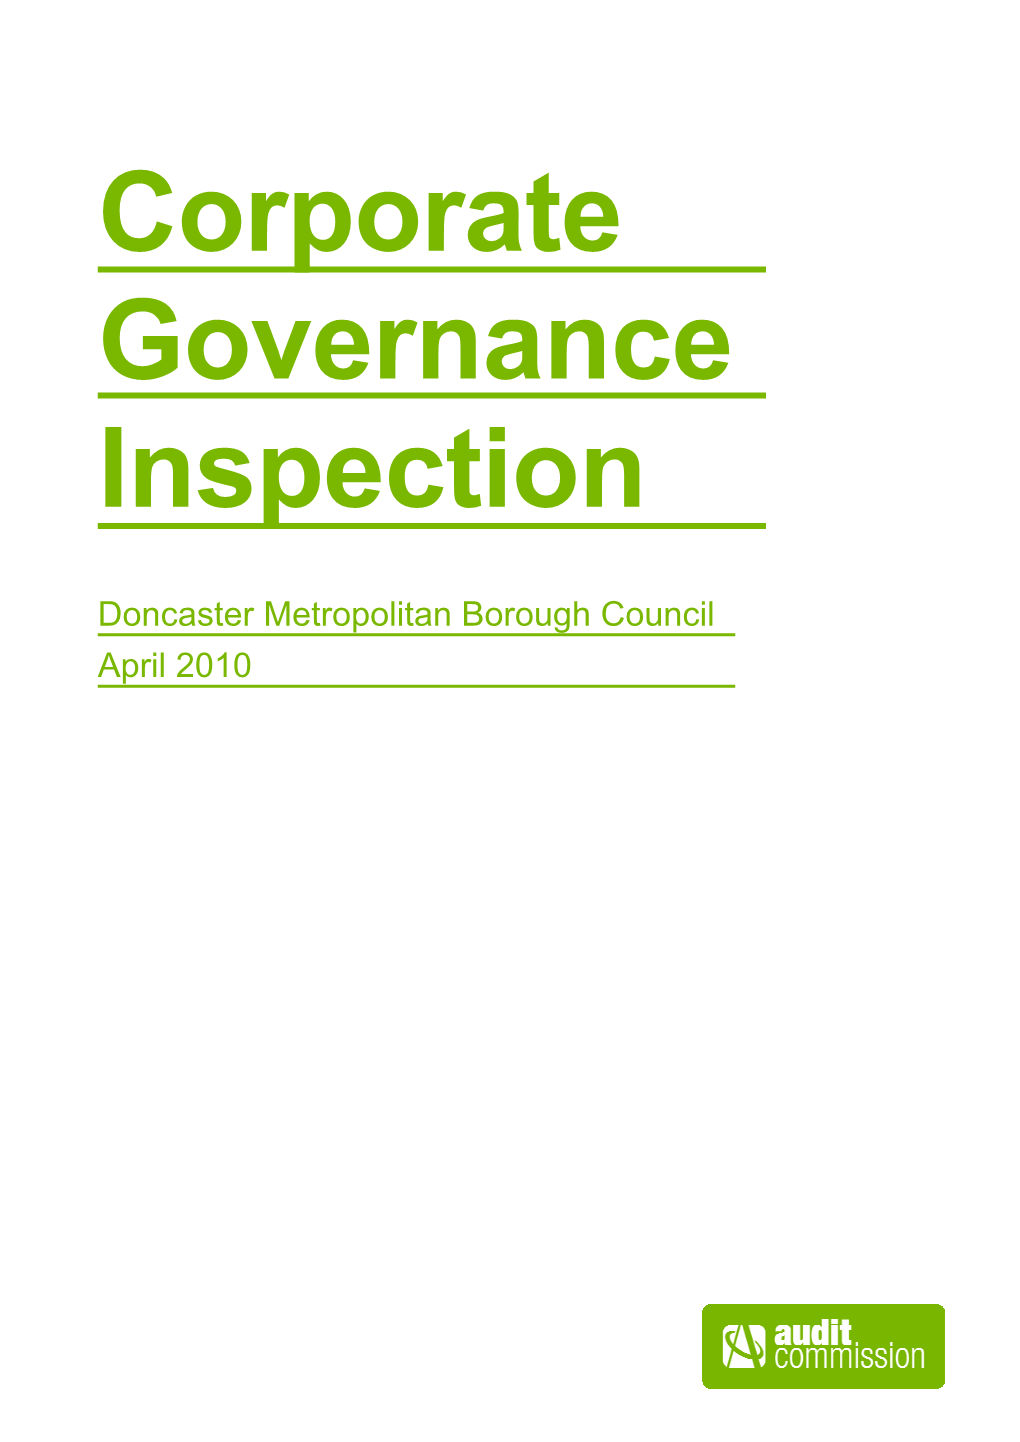 Corporate Governance Inspection